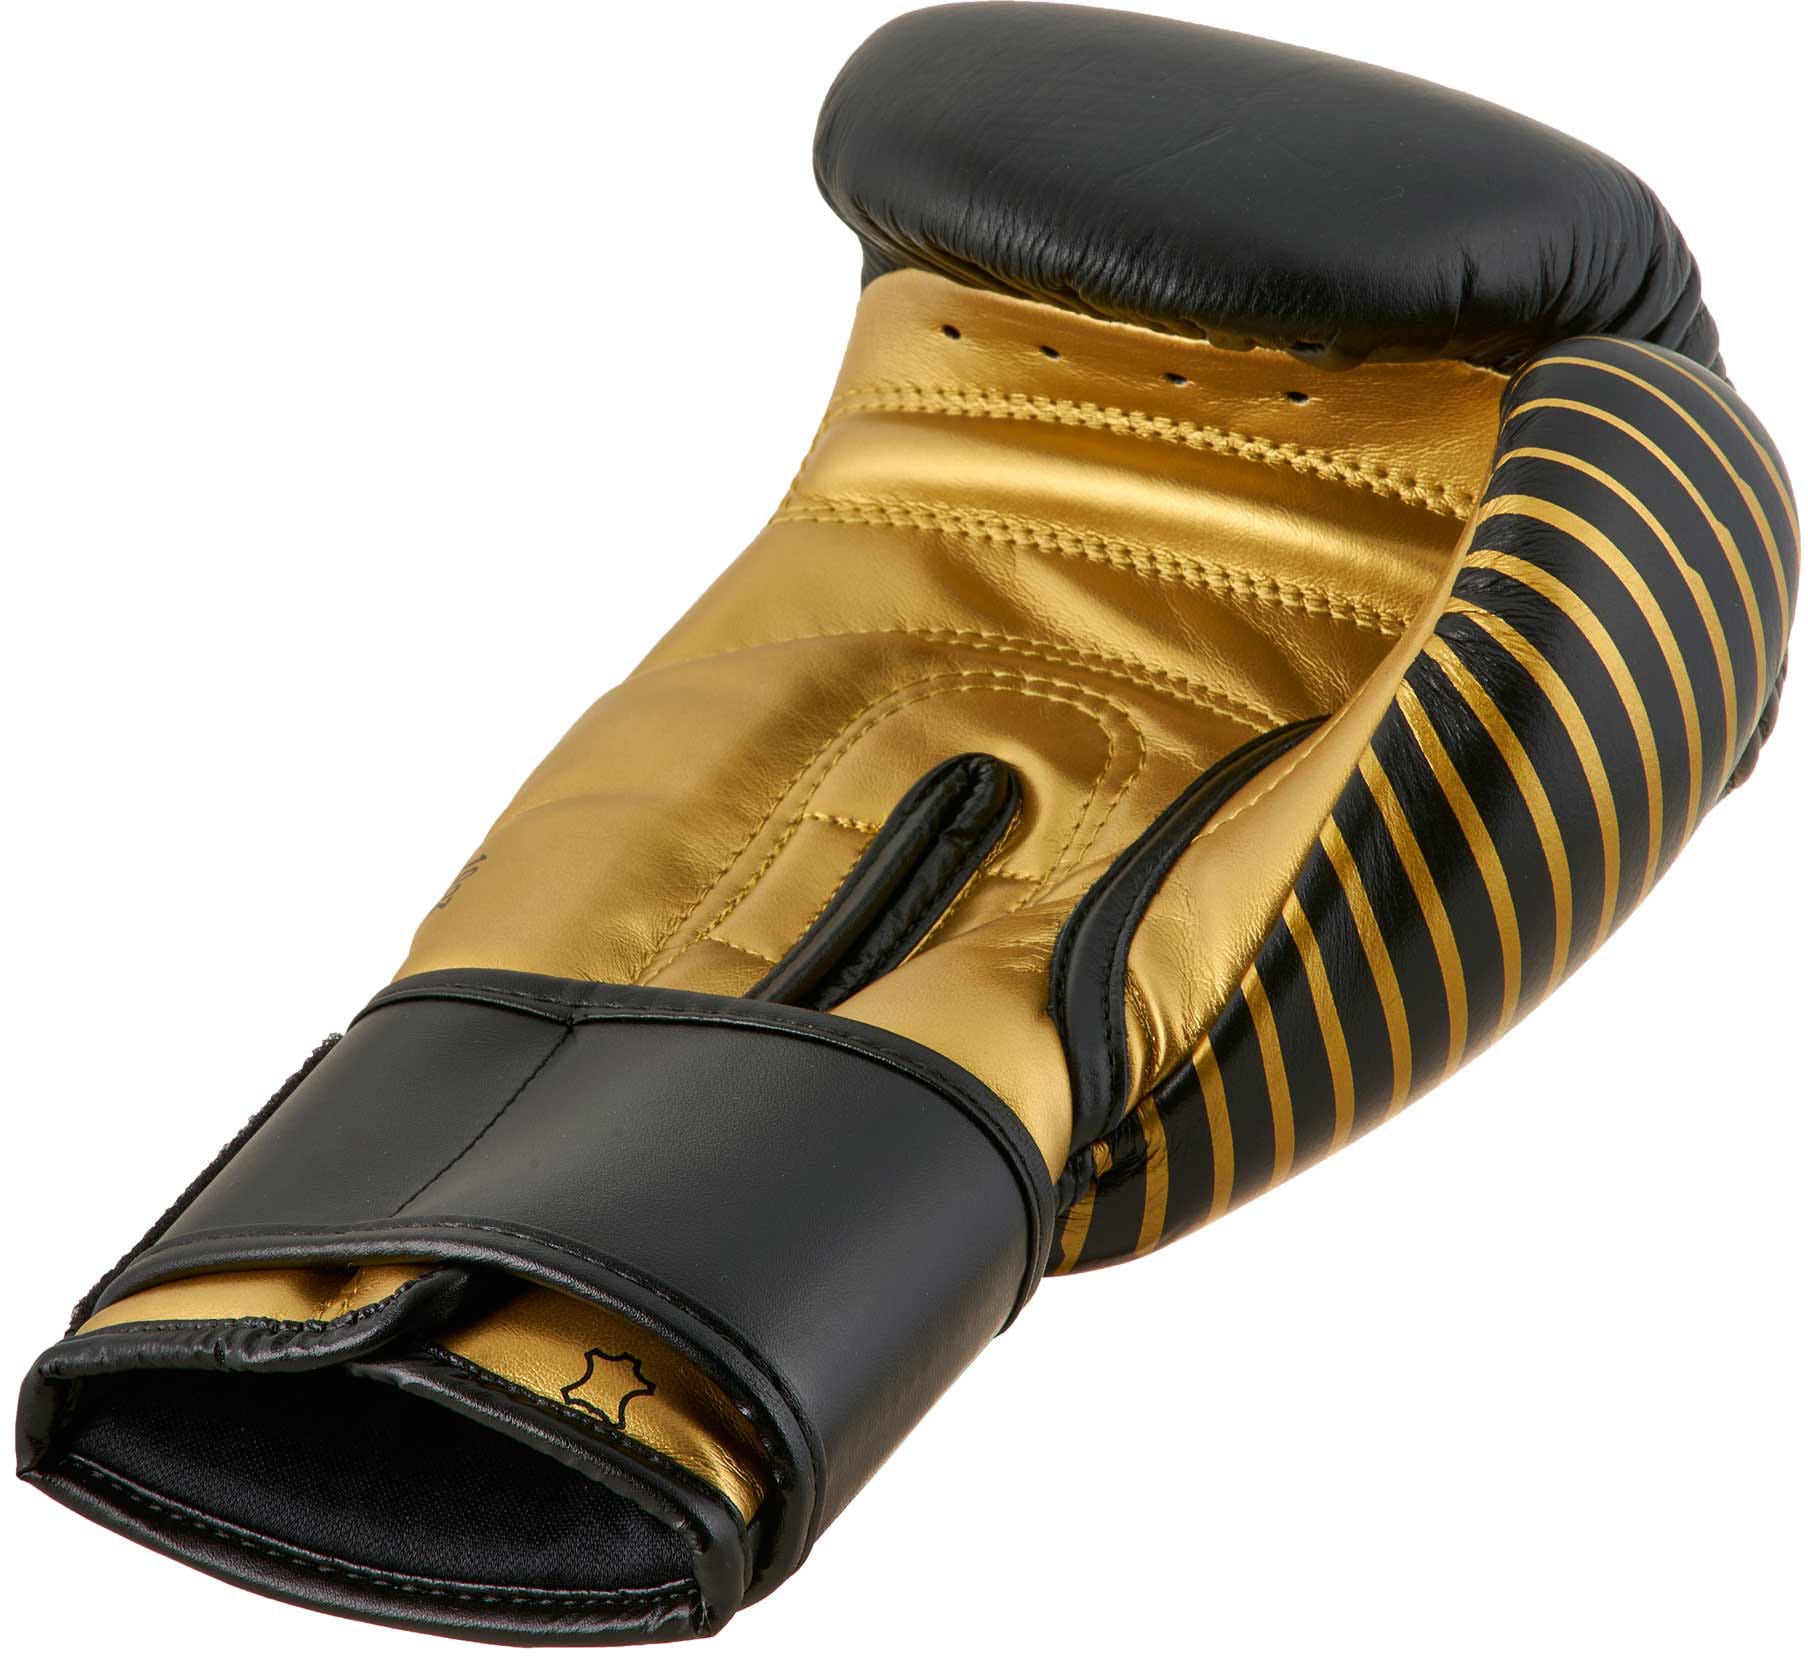 | »Competition Boxhandschuhe BAUR Handschuh« auf Performance Raten adidas